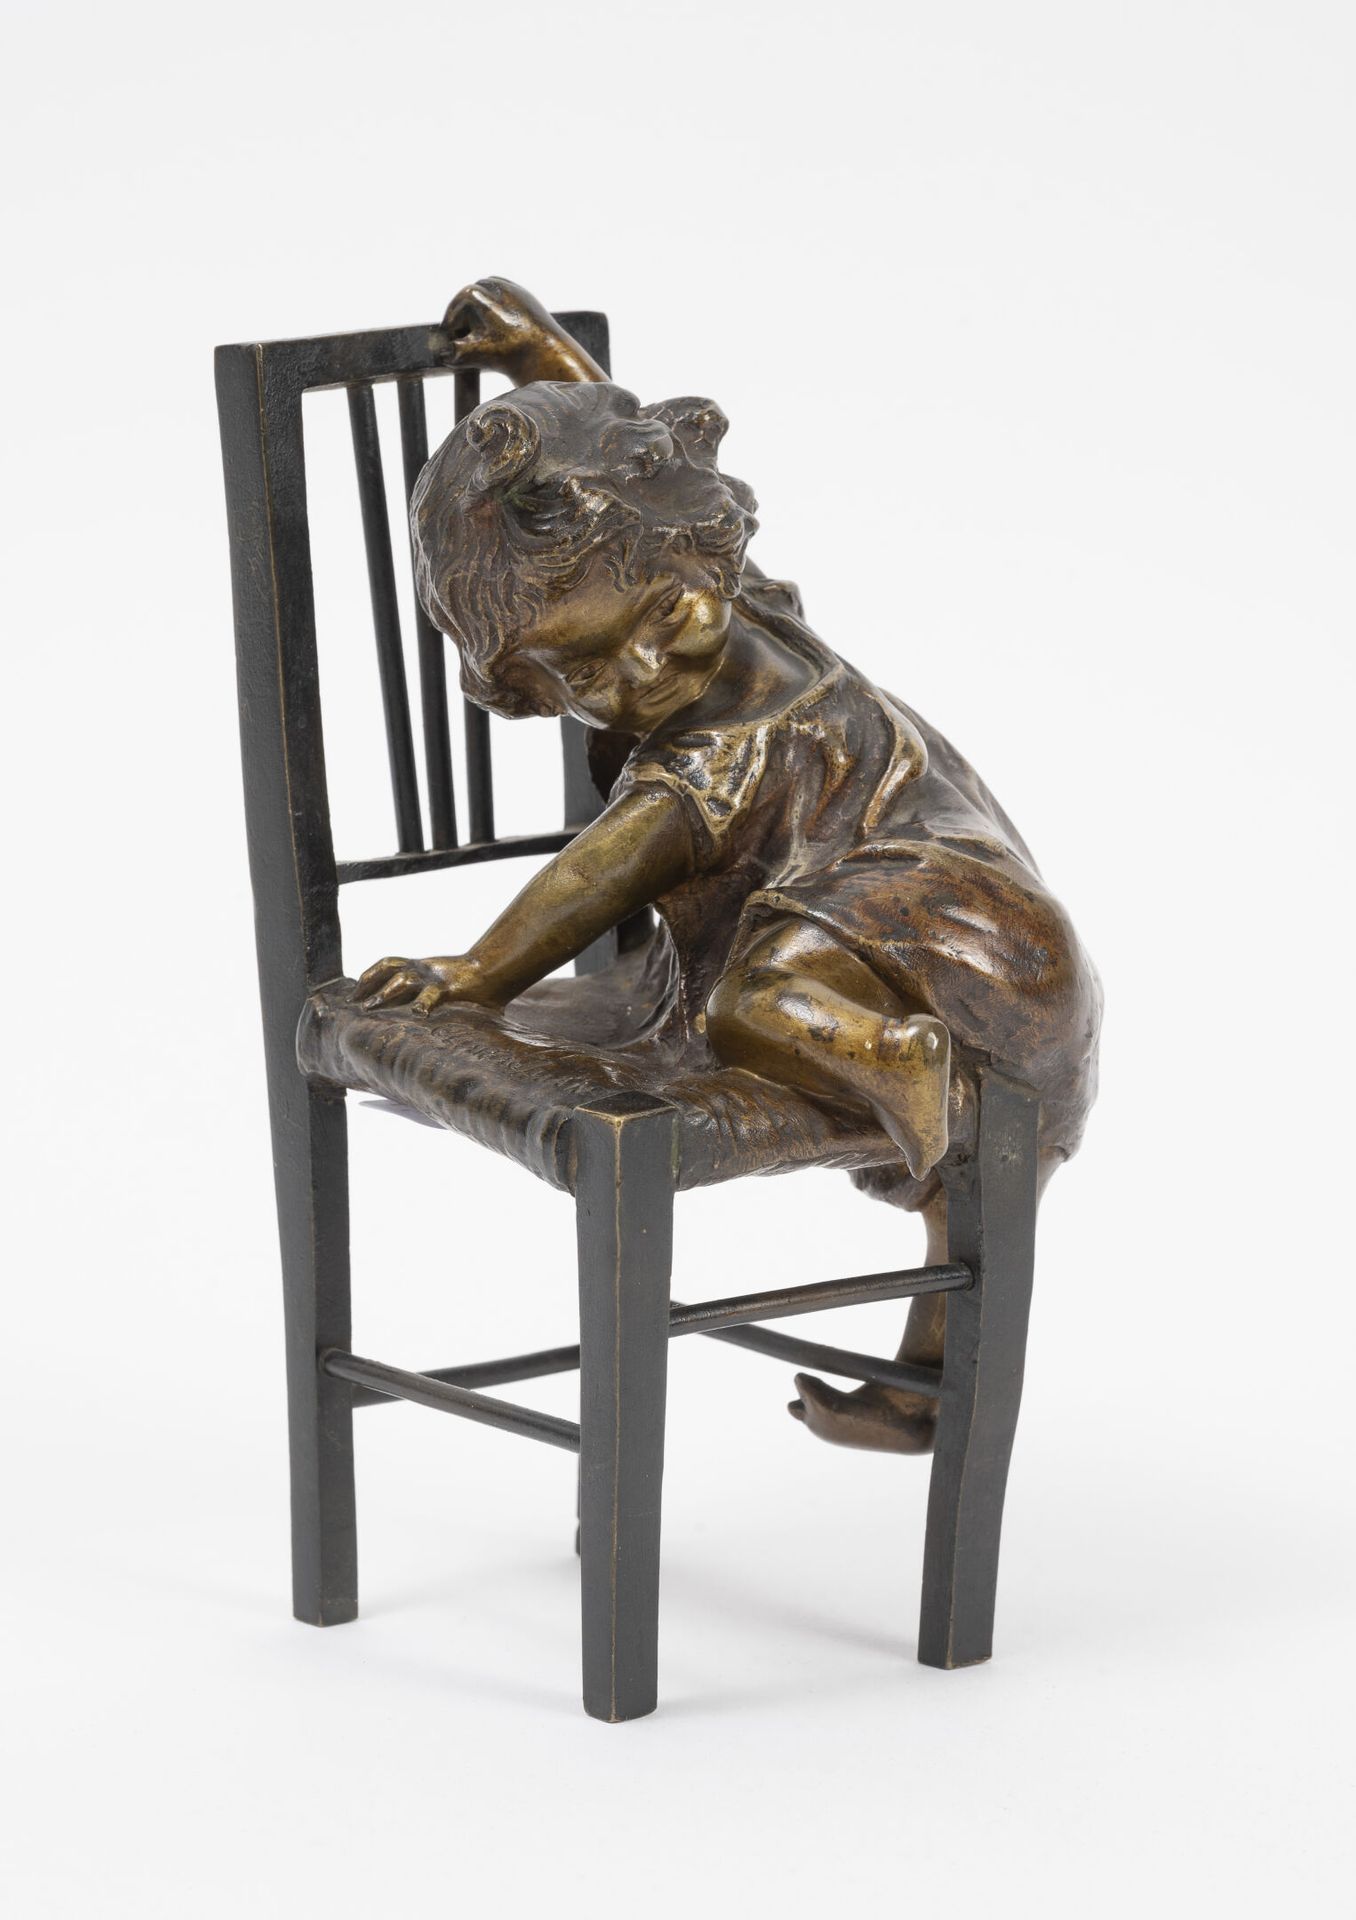 Juan CLARA AYATS (1875-1958) Ragazza con sedia.
Prova di bronzo con una patina d&hellip;